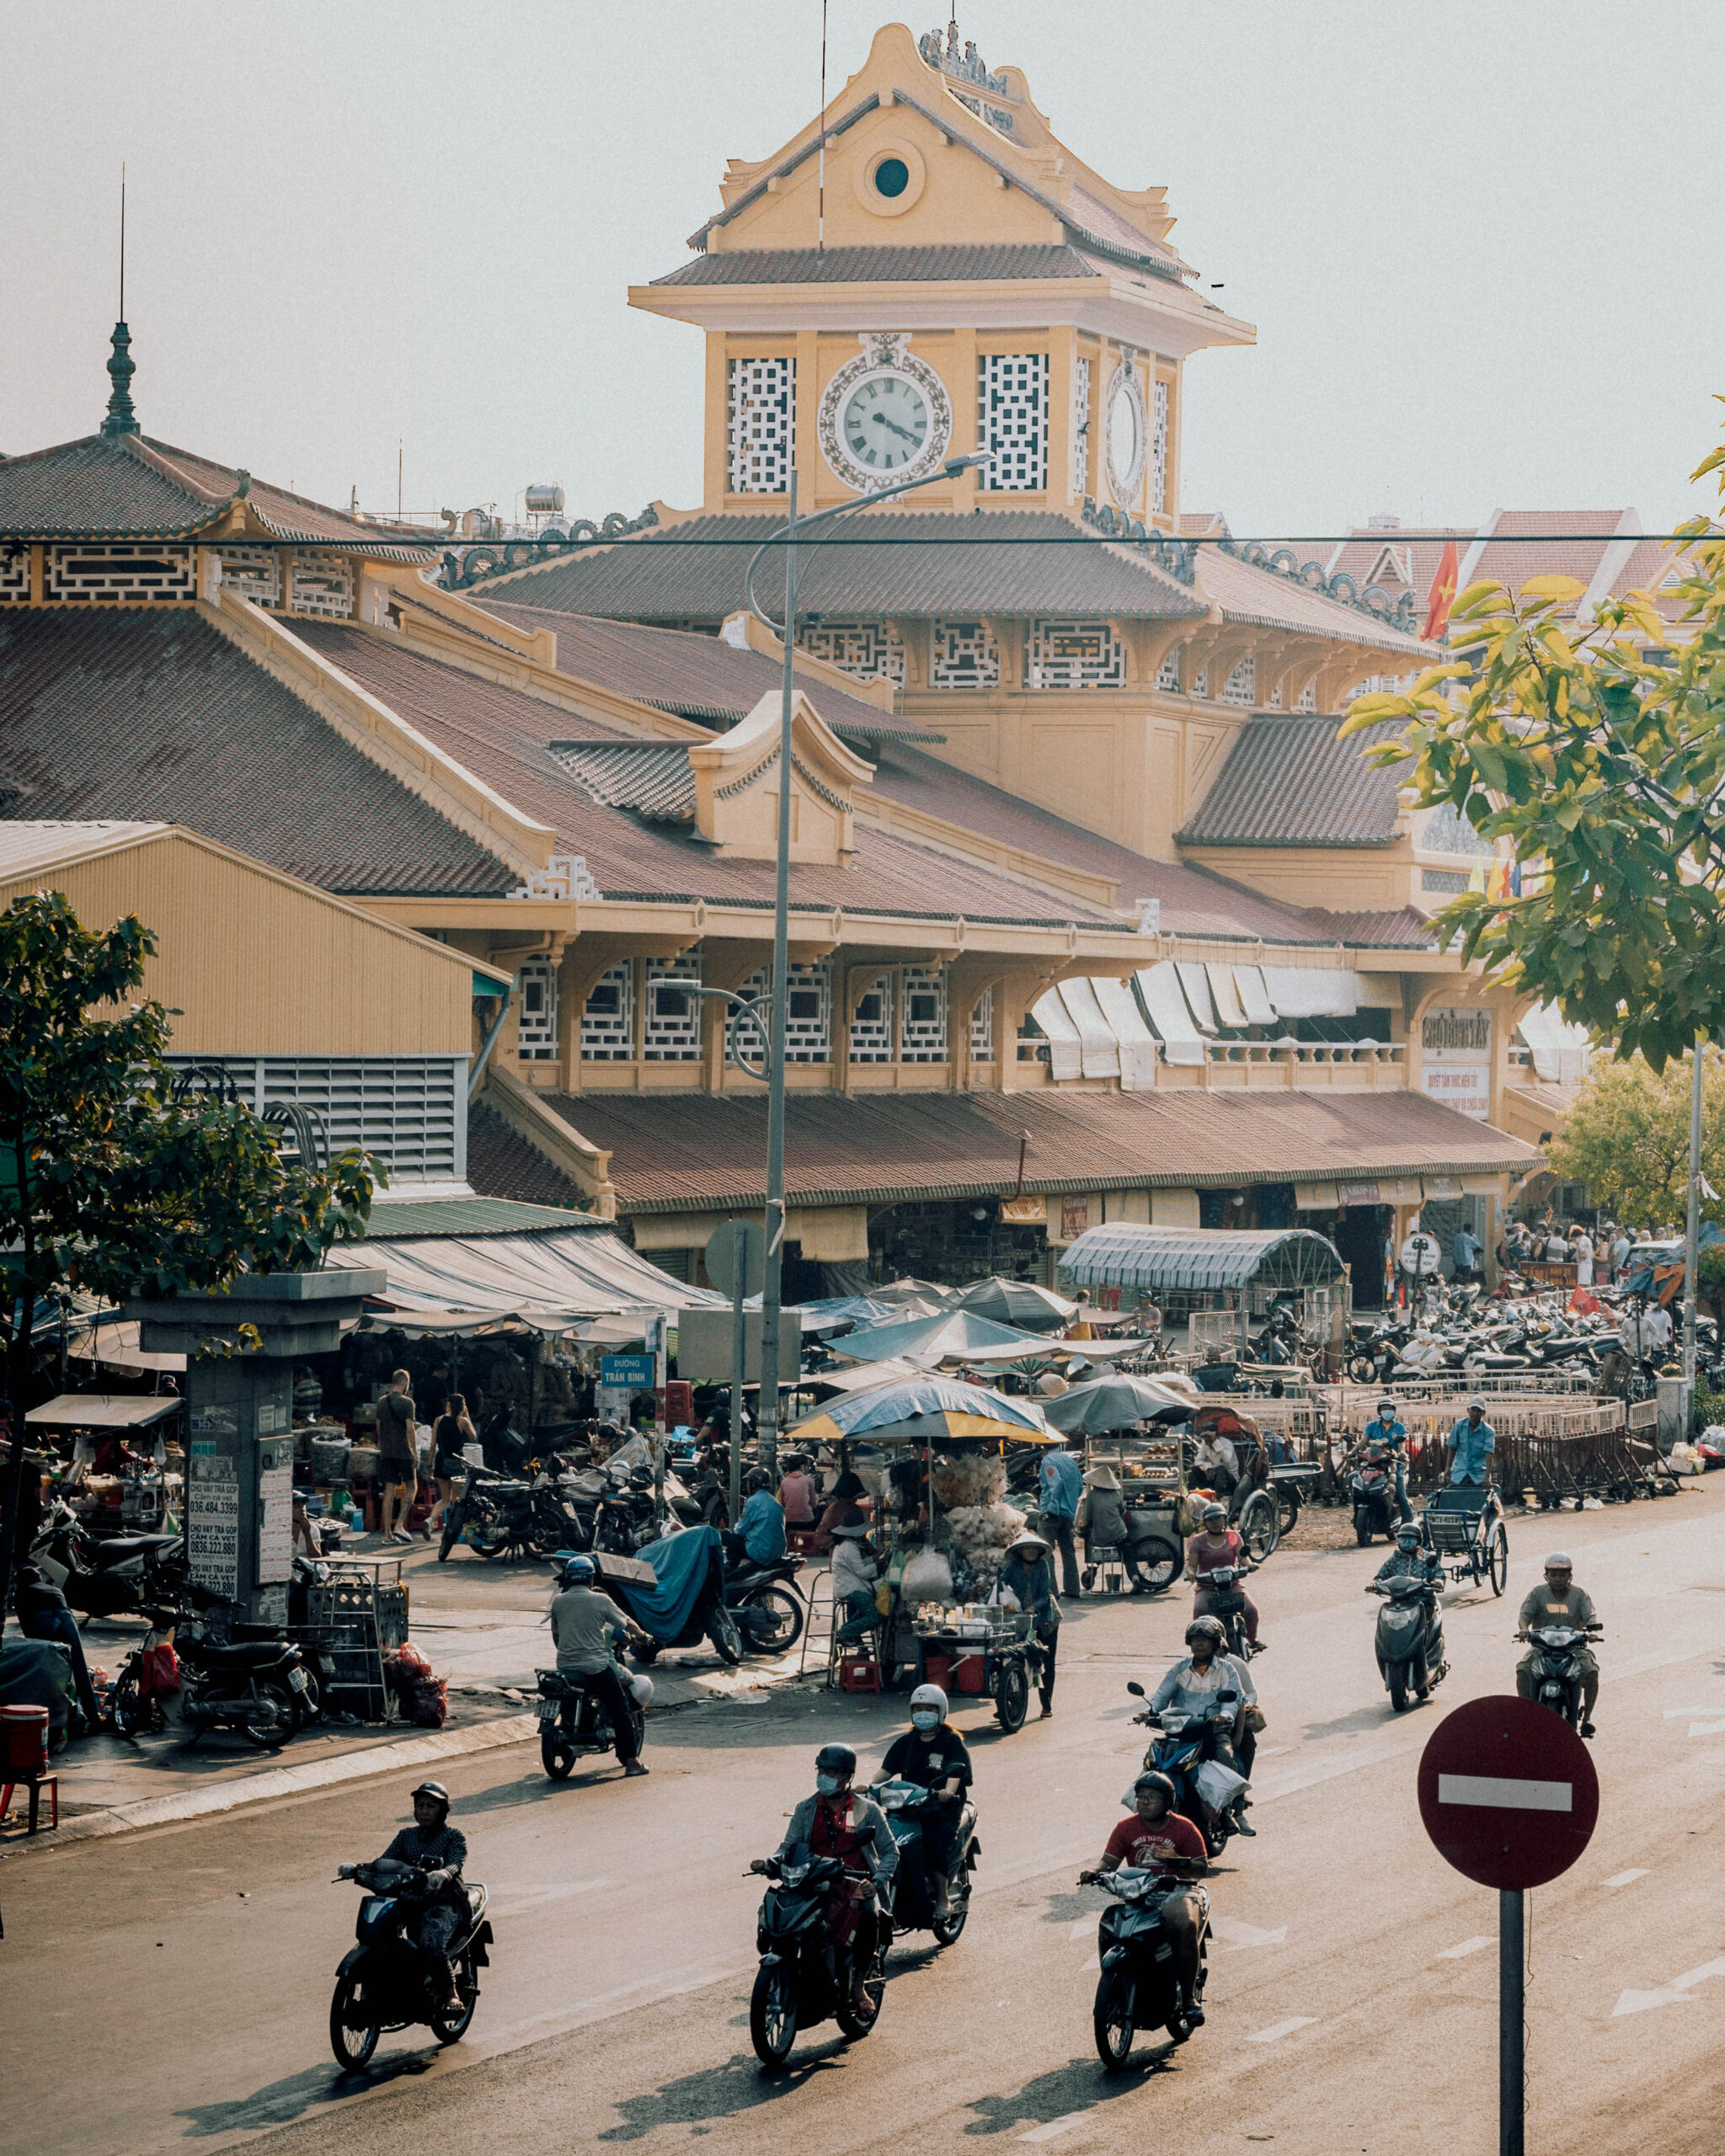 Guide of Vietnam: Street markets in Vietnam